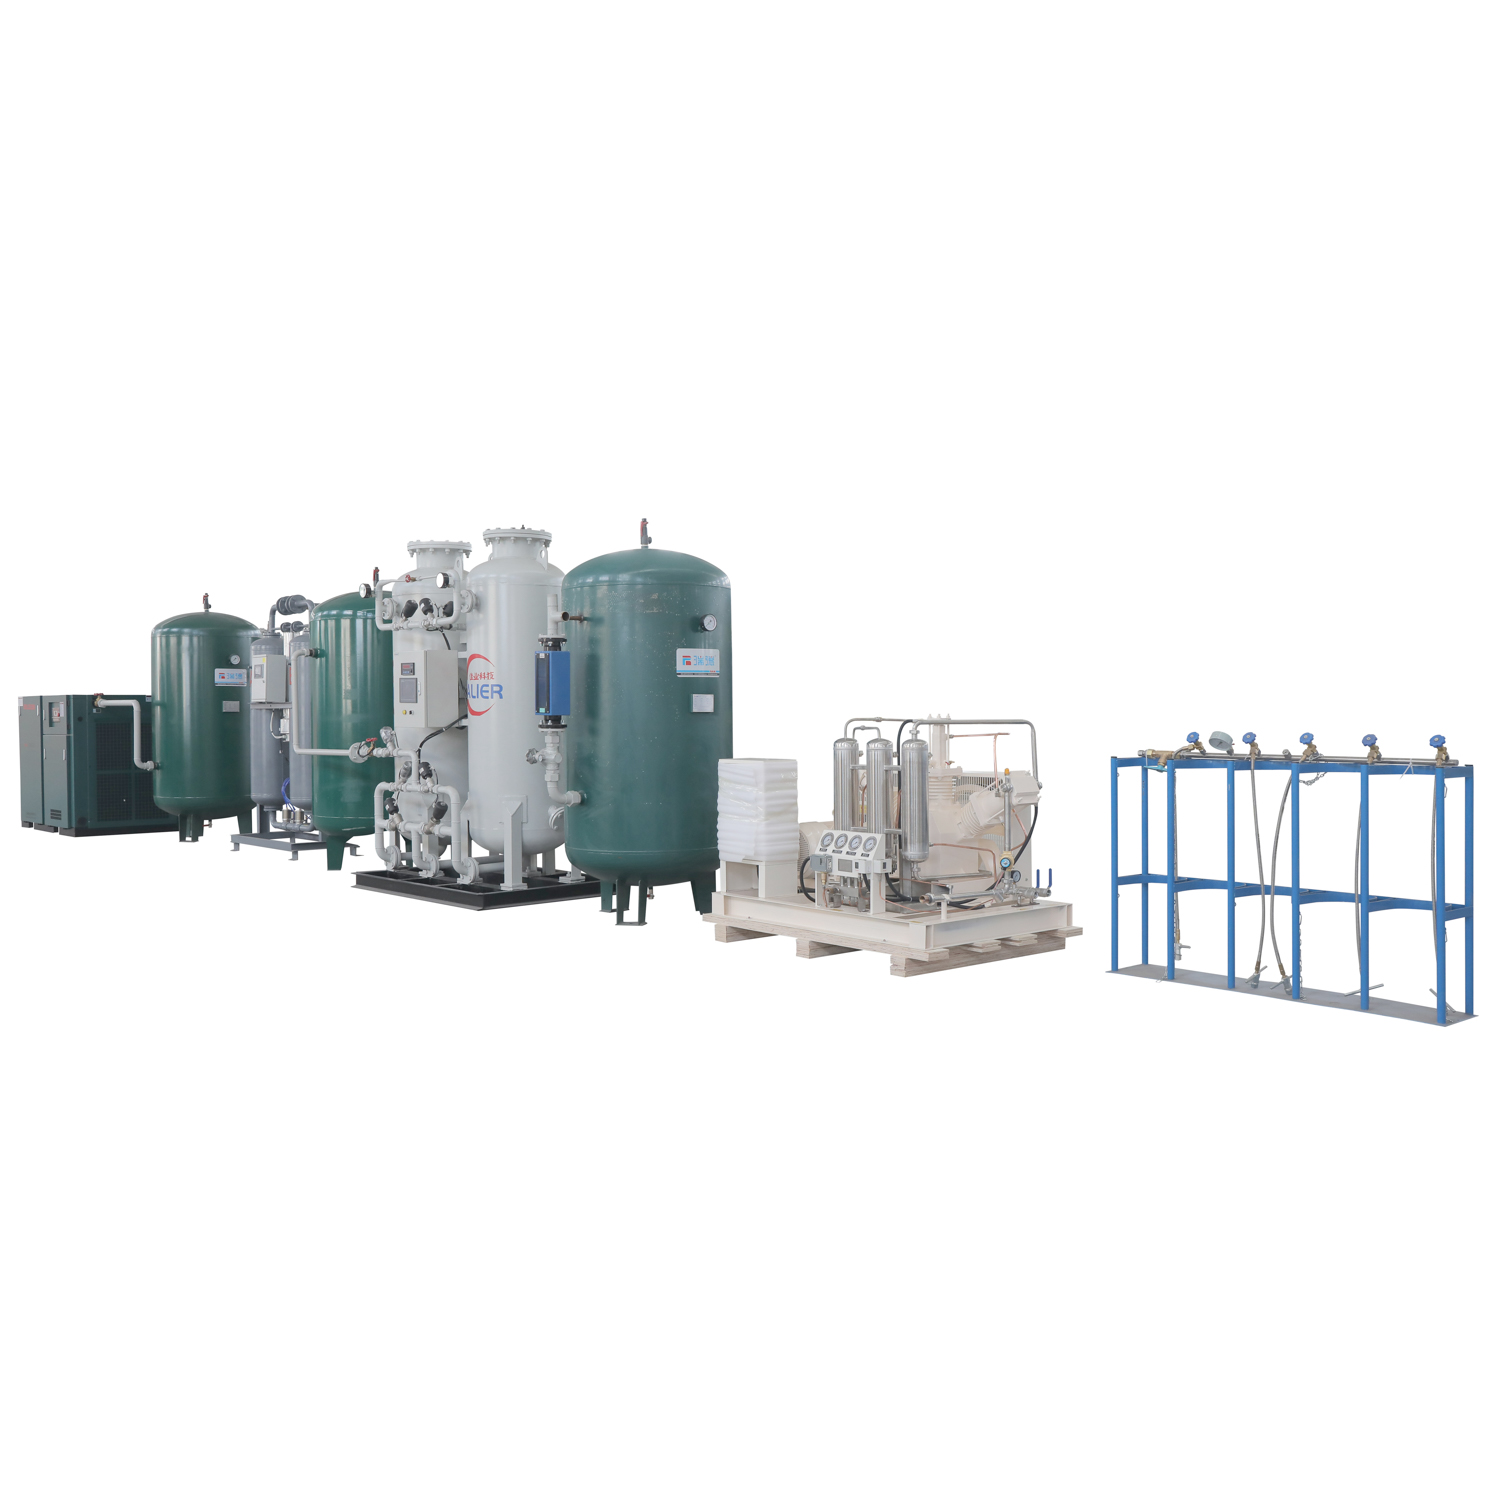 Psa nitrogen generator for glass production